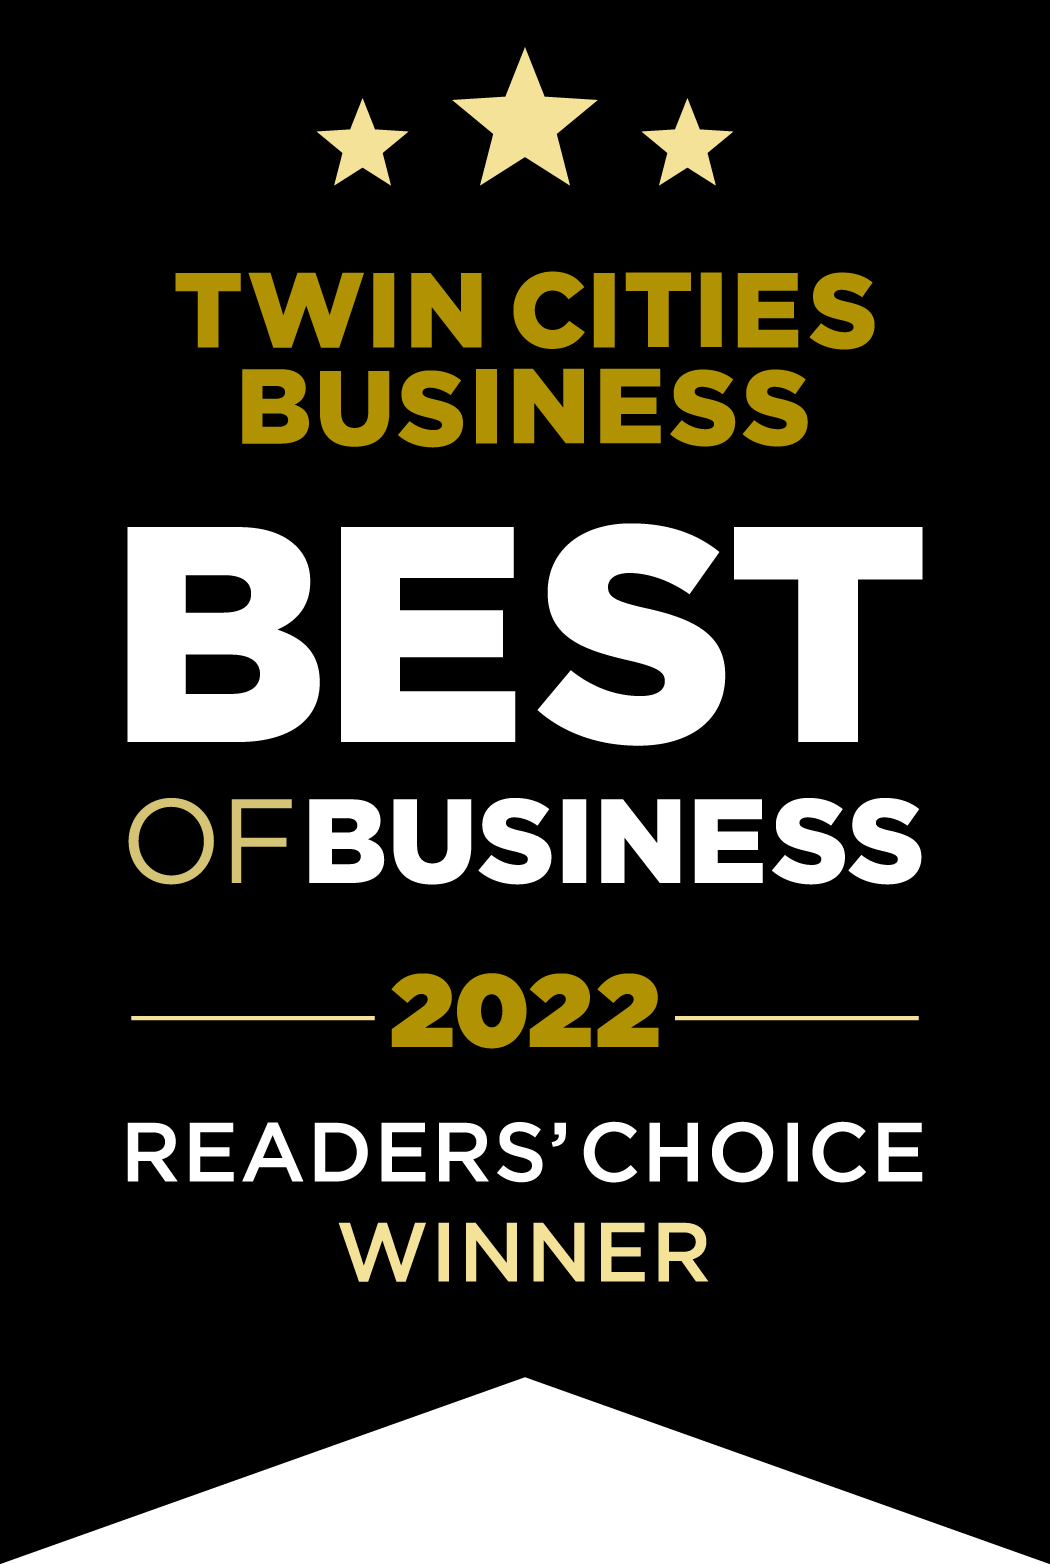 Twin Cities Business: Best of Business 2022. Reader's choice winner.